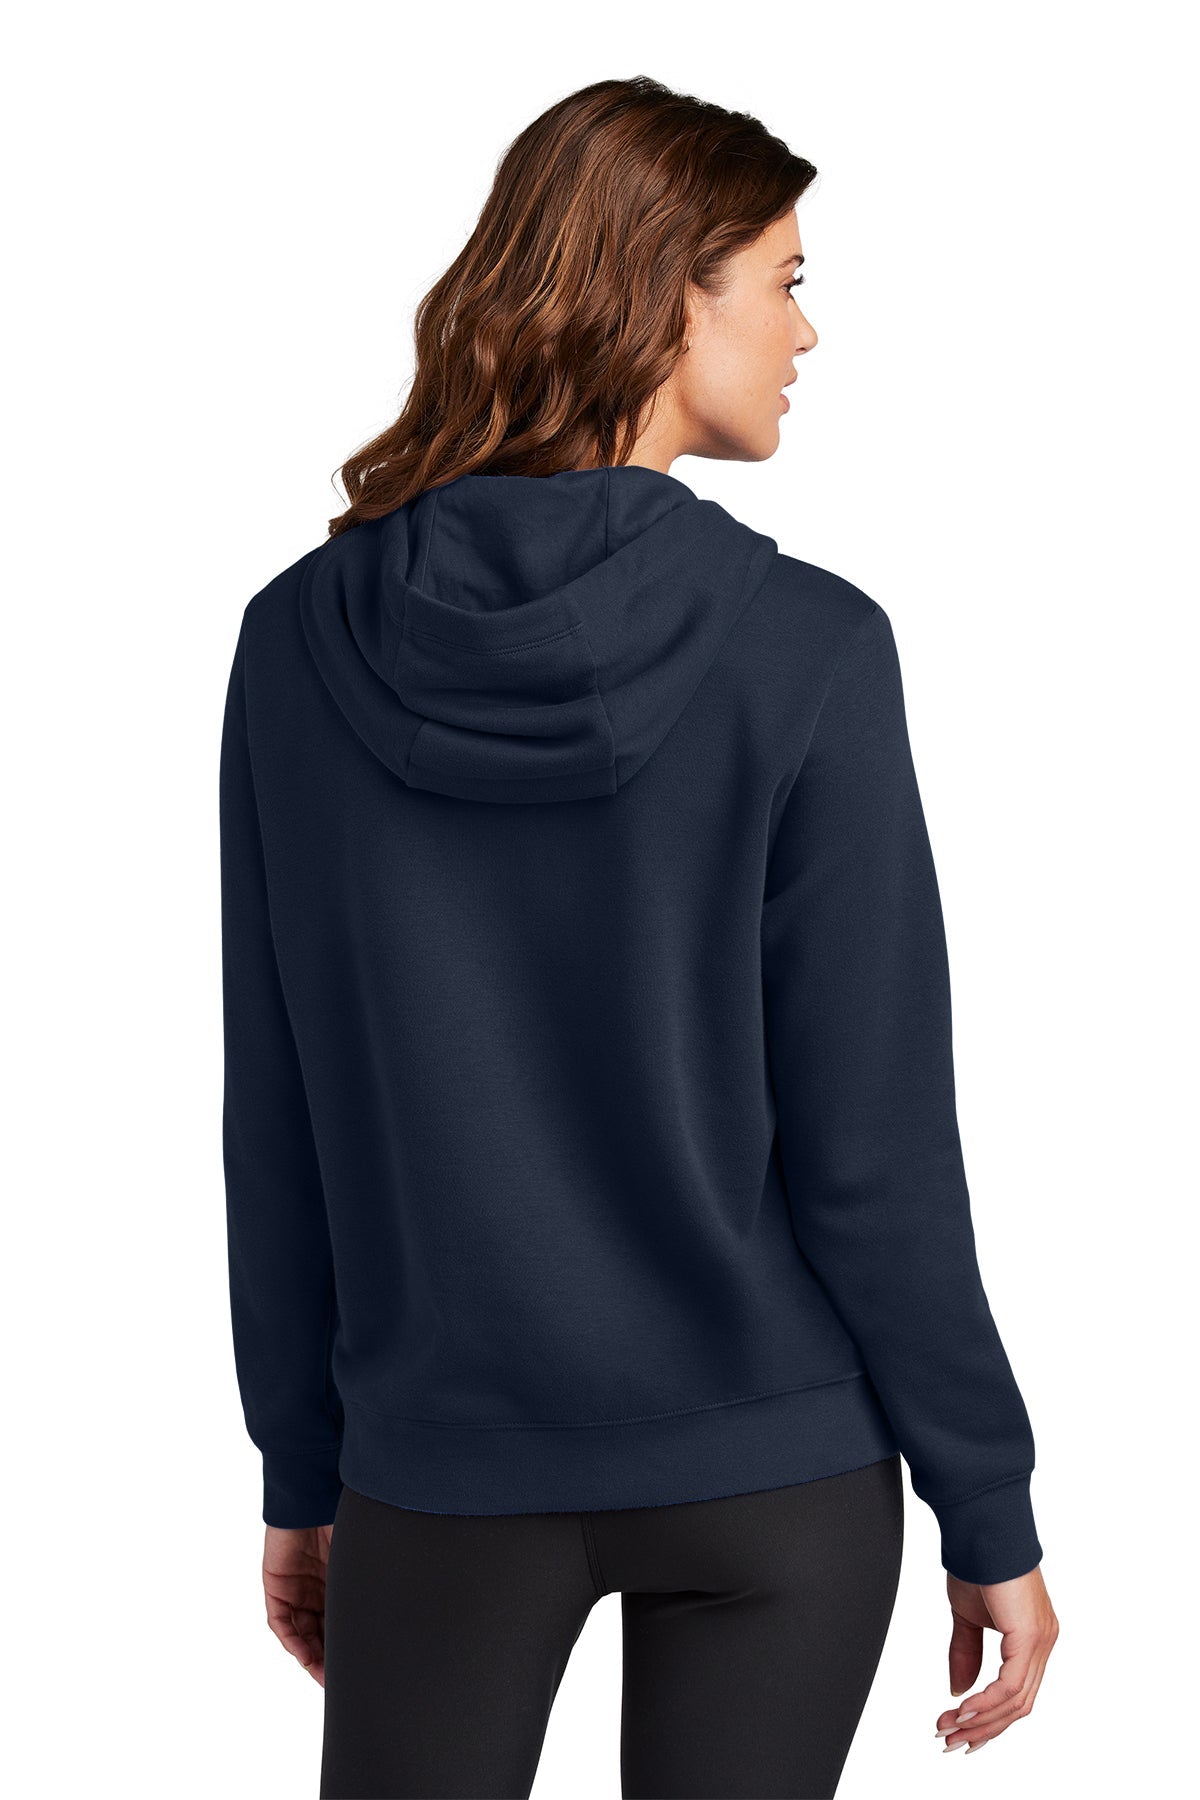 Nike Ladies Club Fleece Pullover Custom Hoodies, Midnight Navy